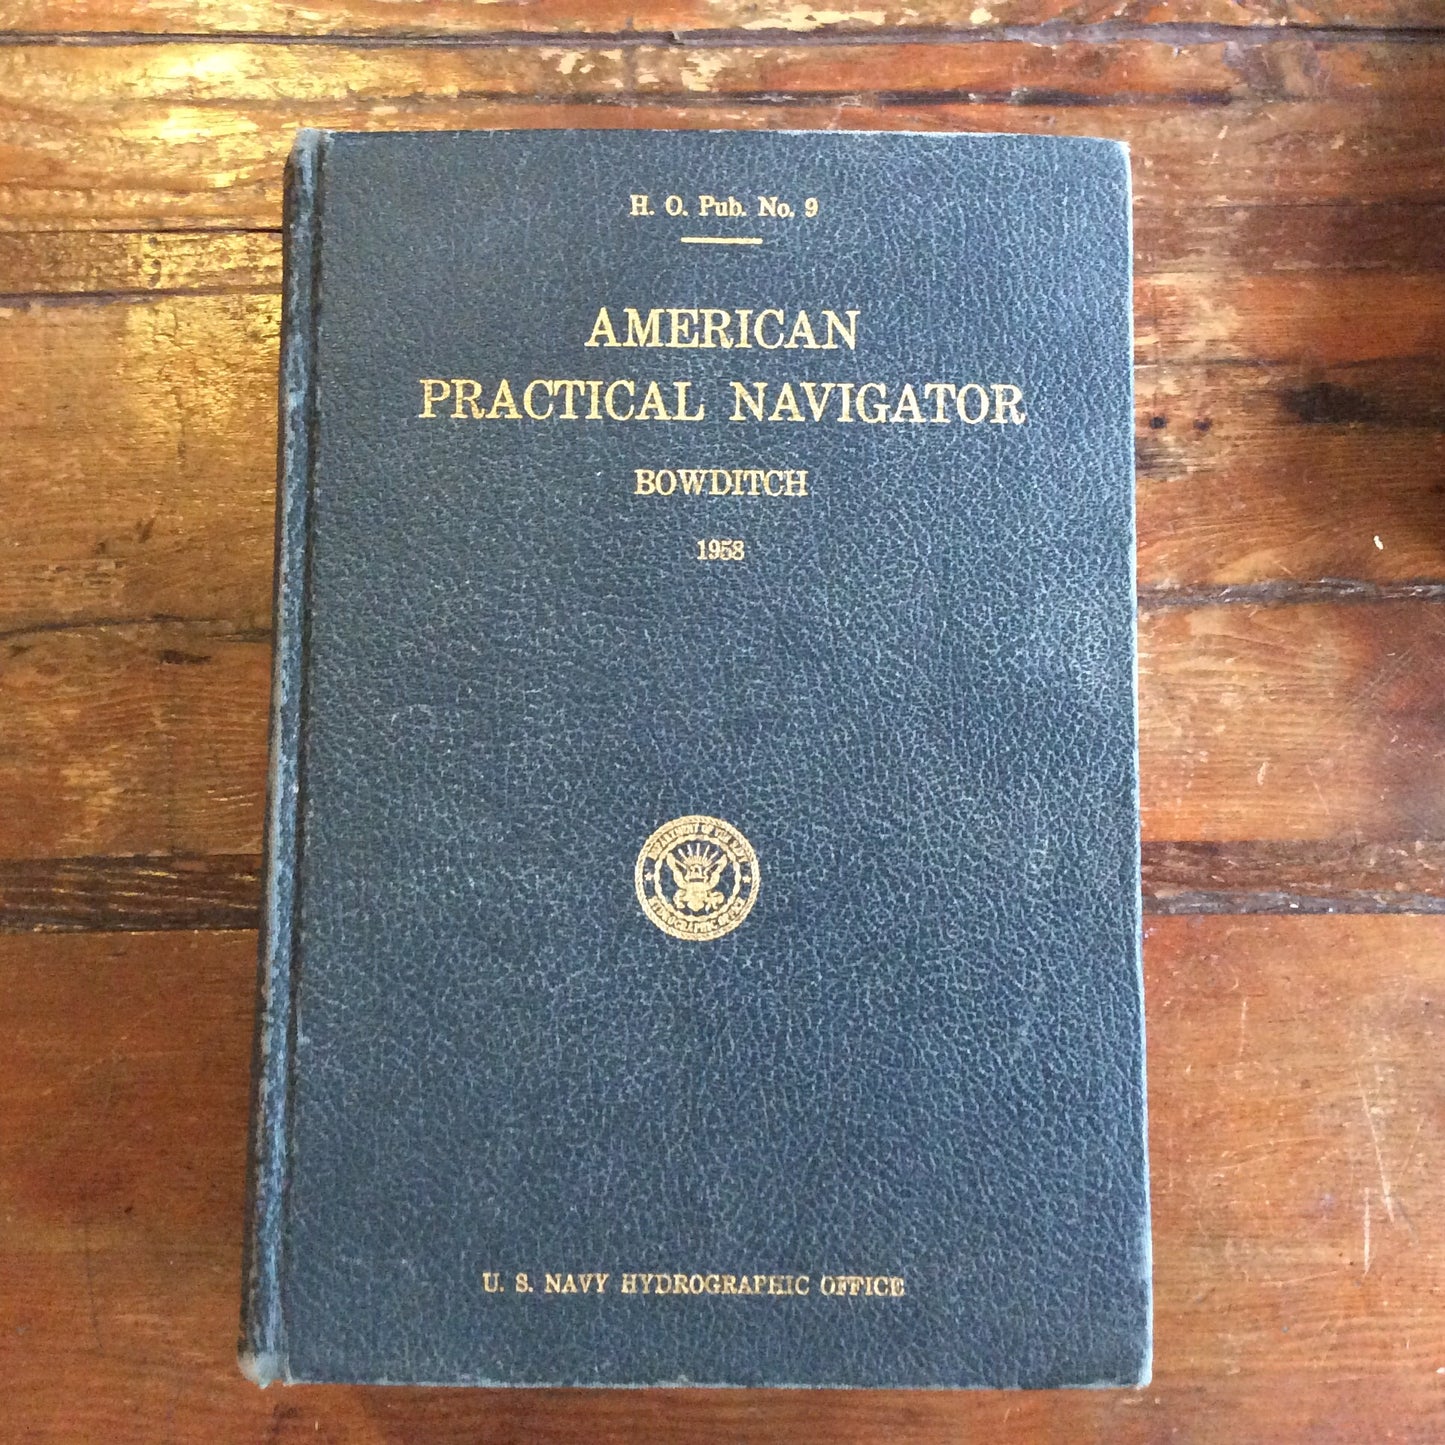 Book,"American Practical Navigator" An Epitome of Navigation, No. 9"